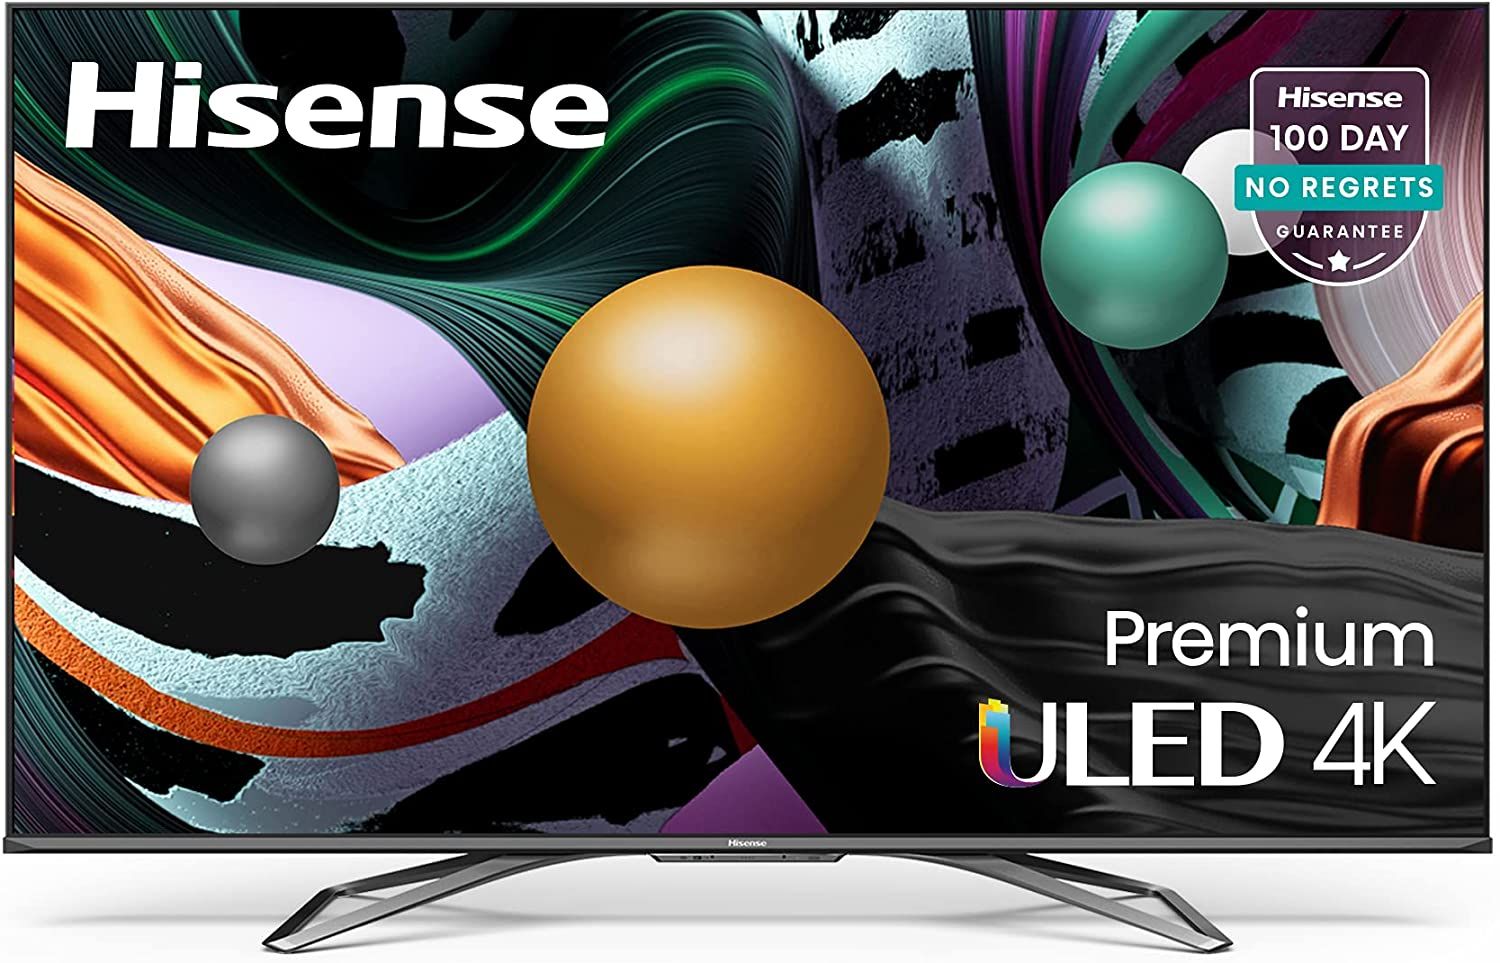 Hisense U8G Android Smart TV